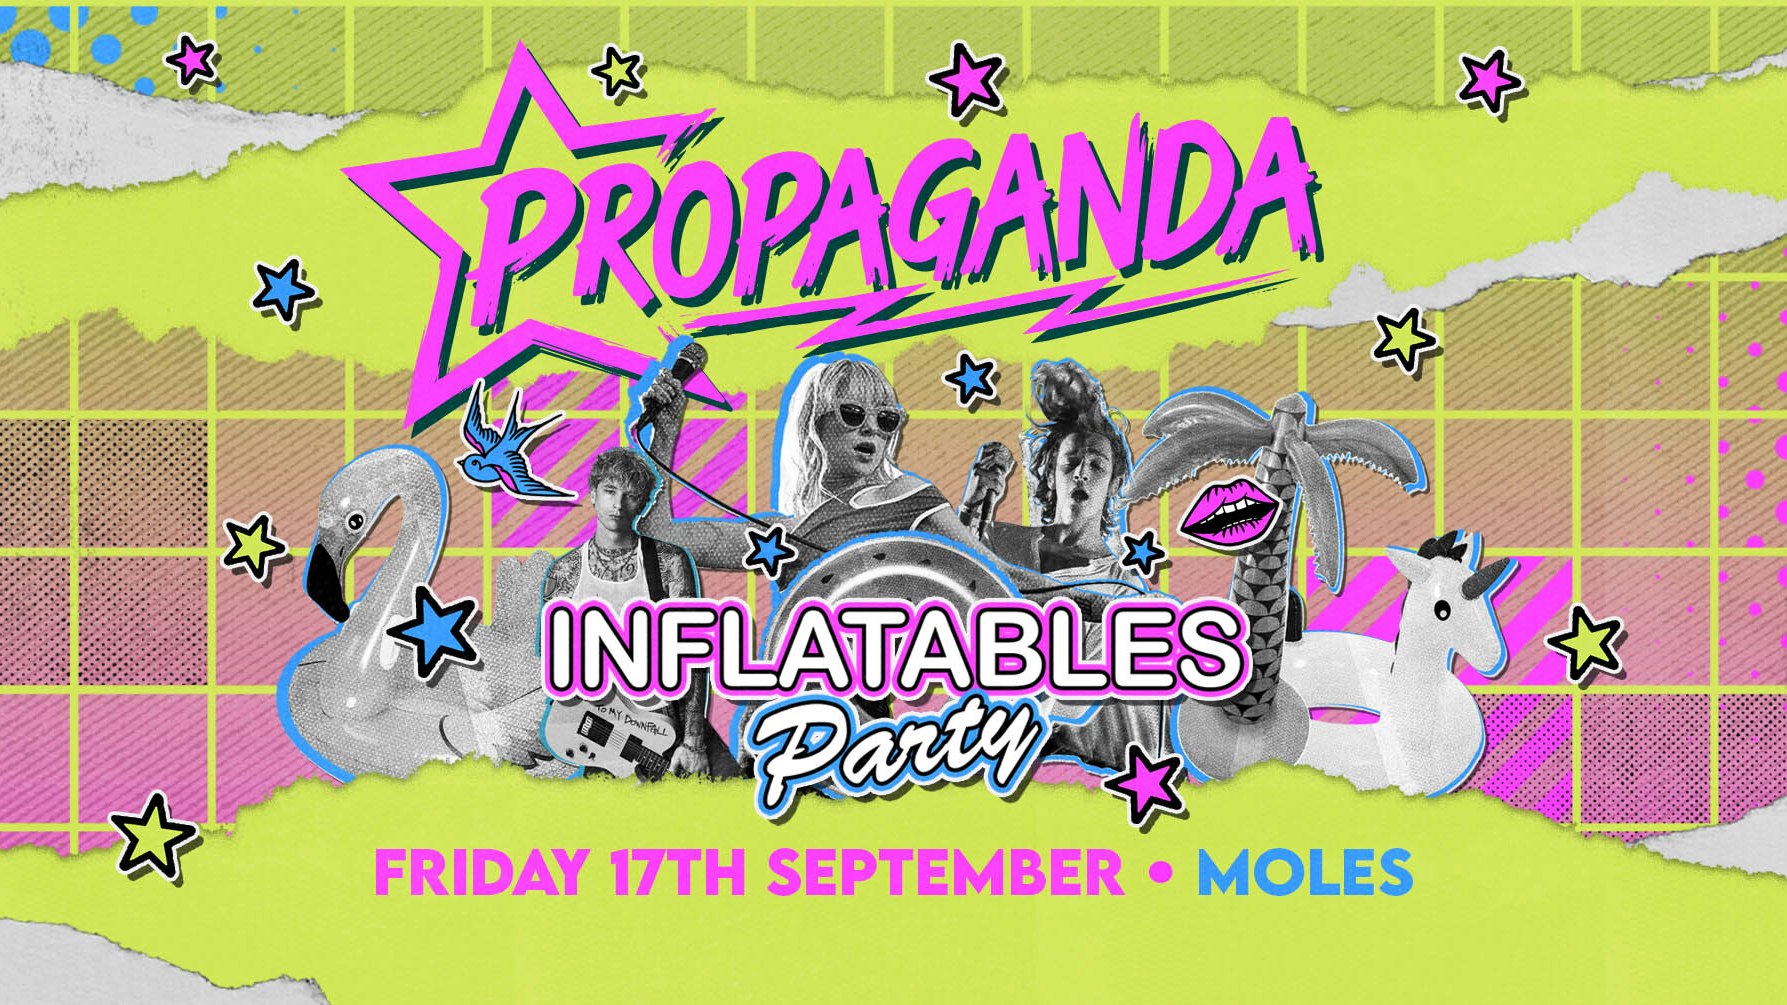 Propaganda Bath – Inflatables Party!